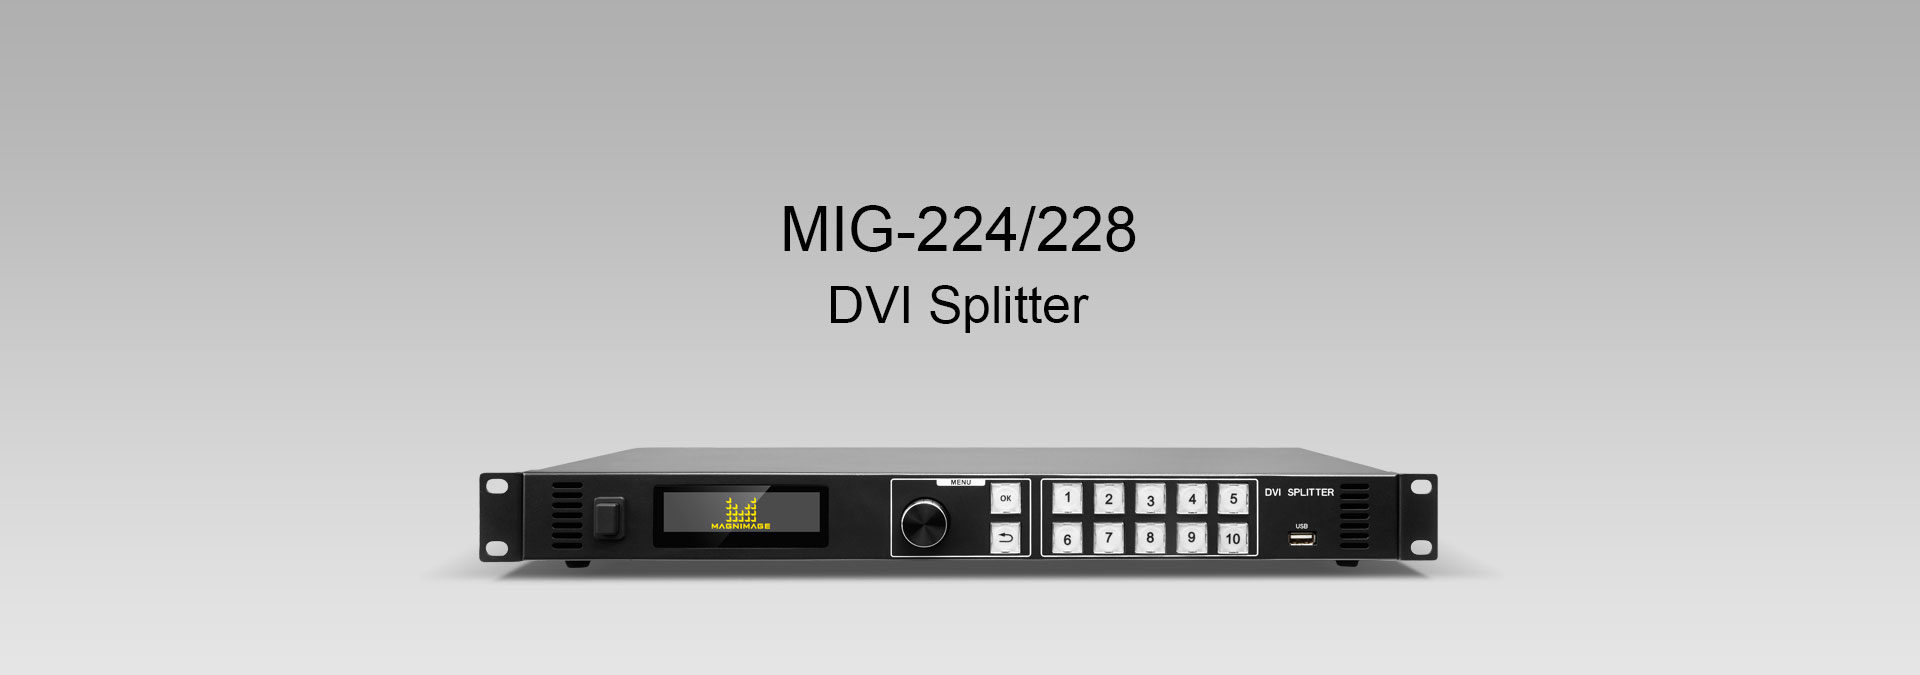 MIG-224/228 Splitter Magnimage